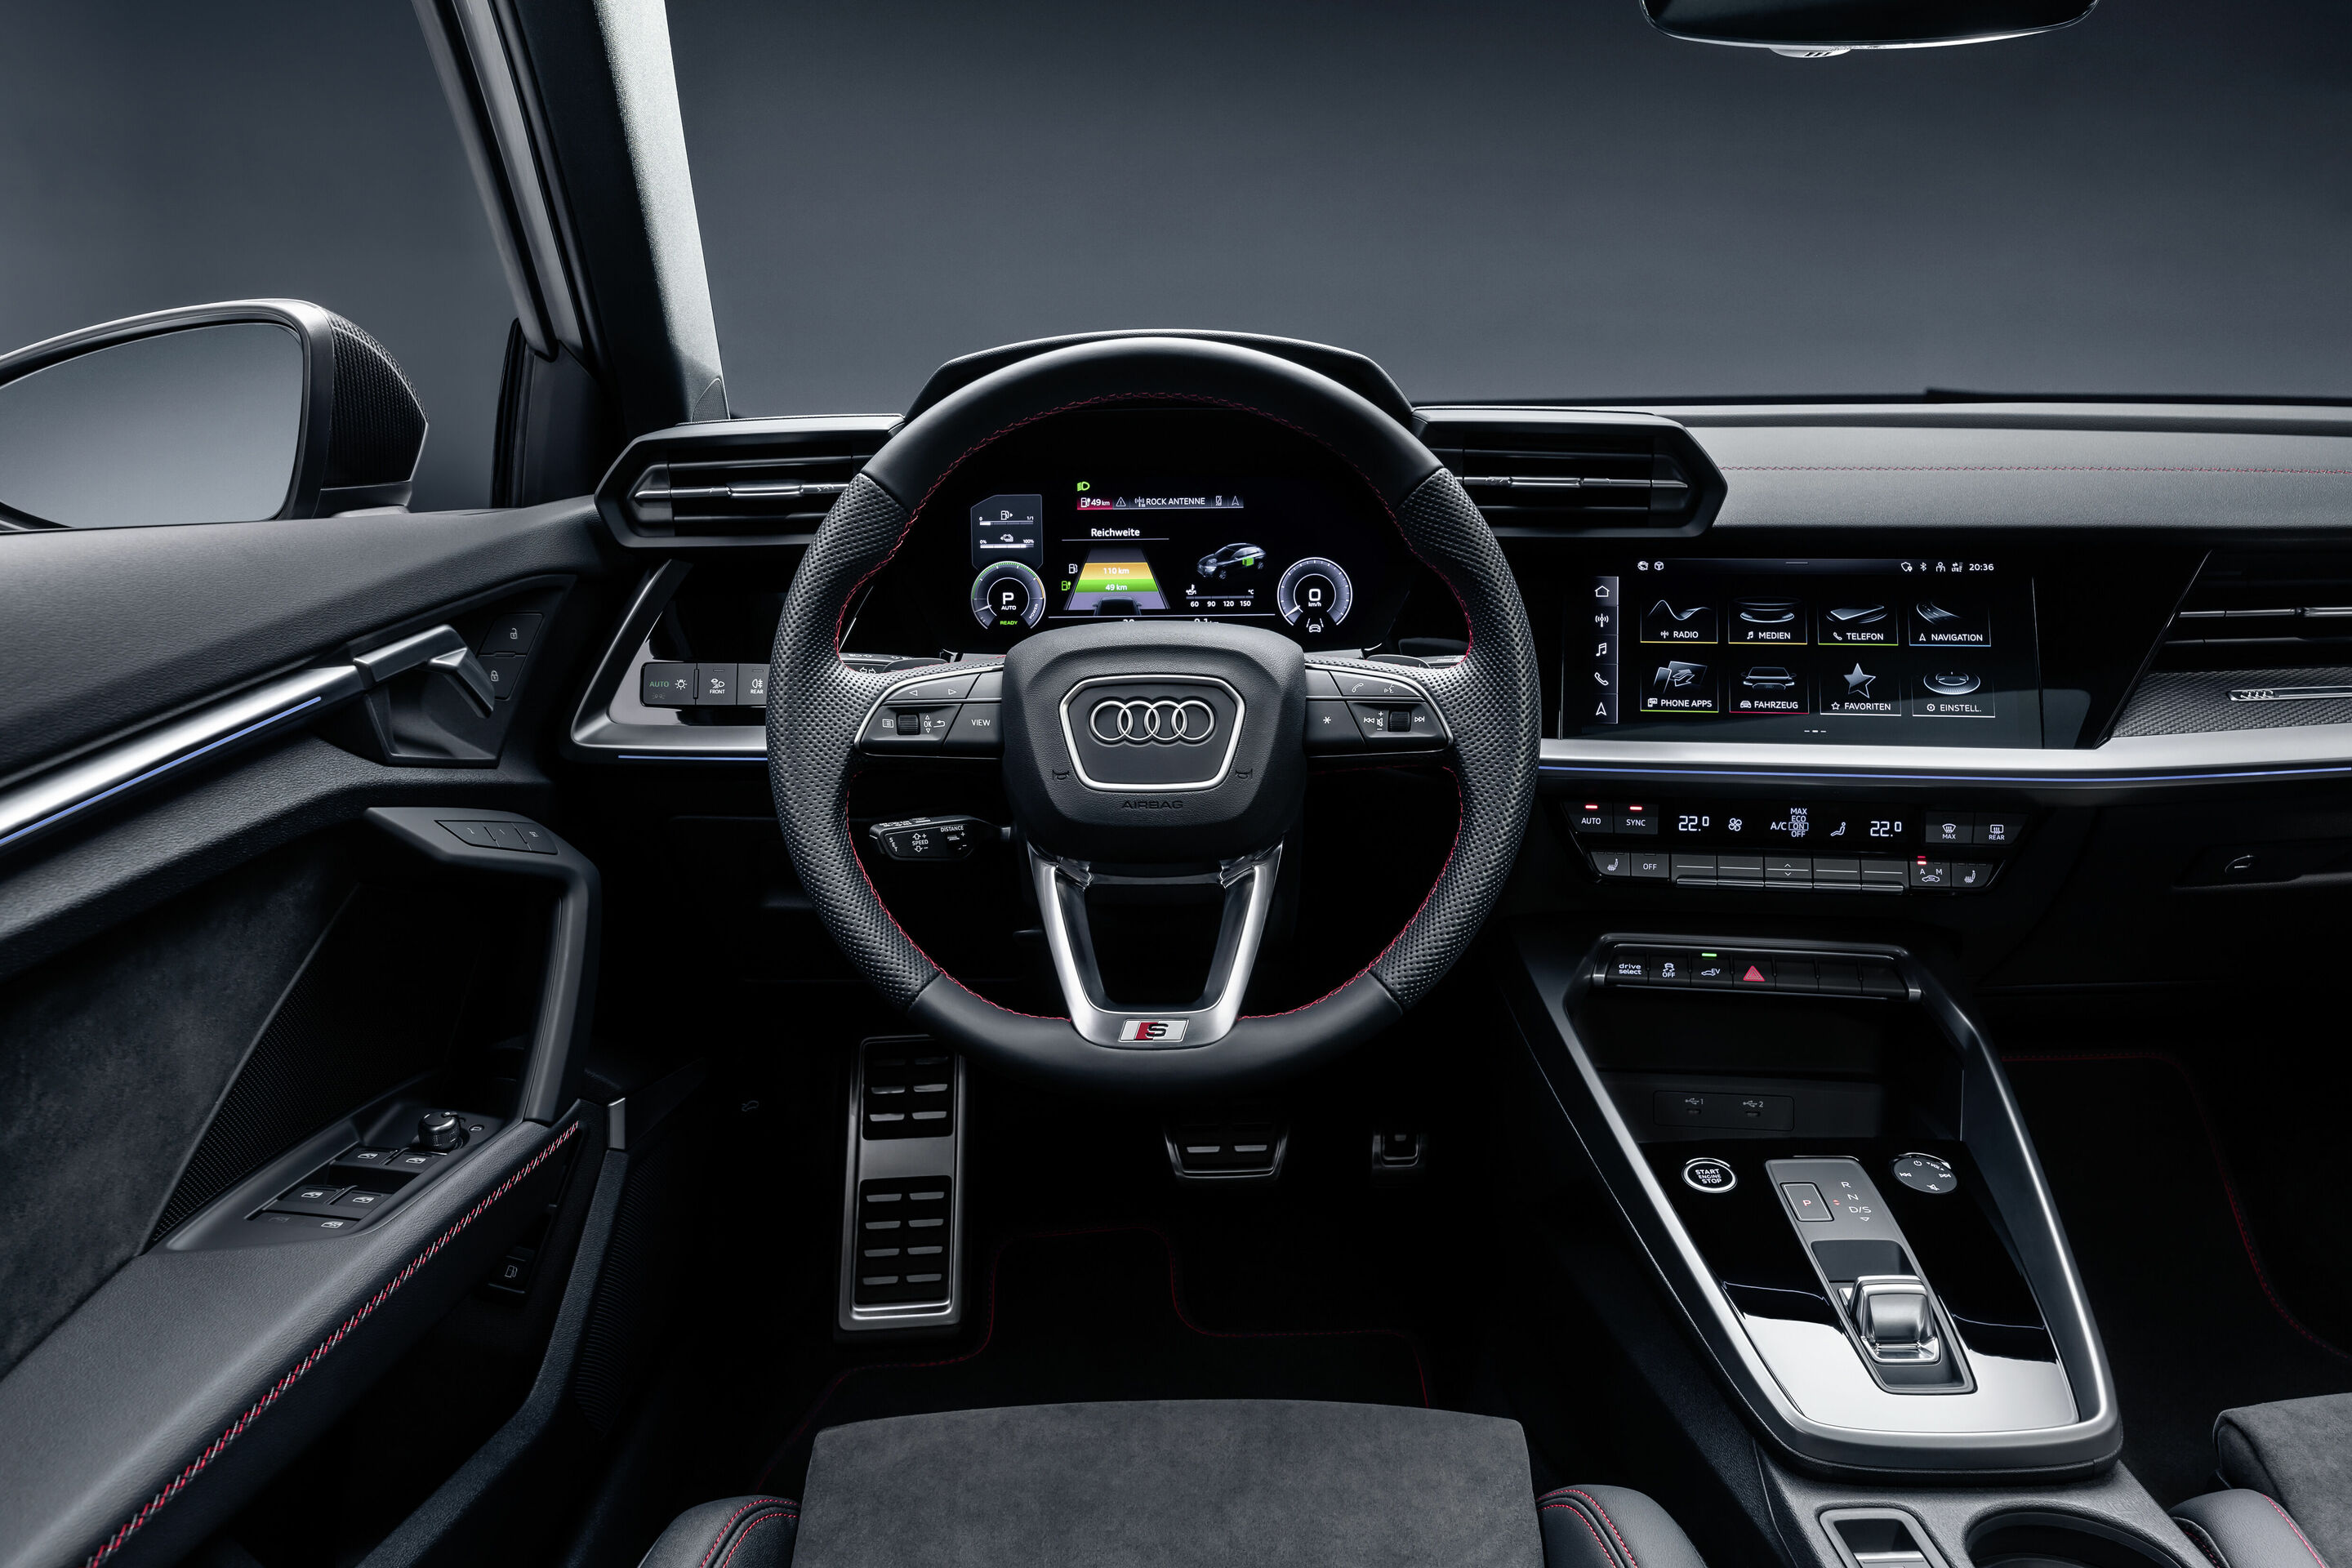 Compact hybrid with 245 PS system output: The Audi A3 Sportback 45 TFSI e